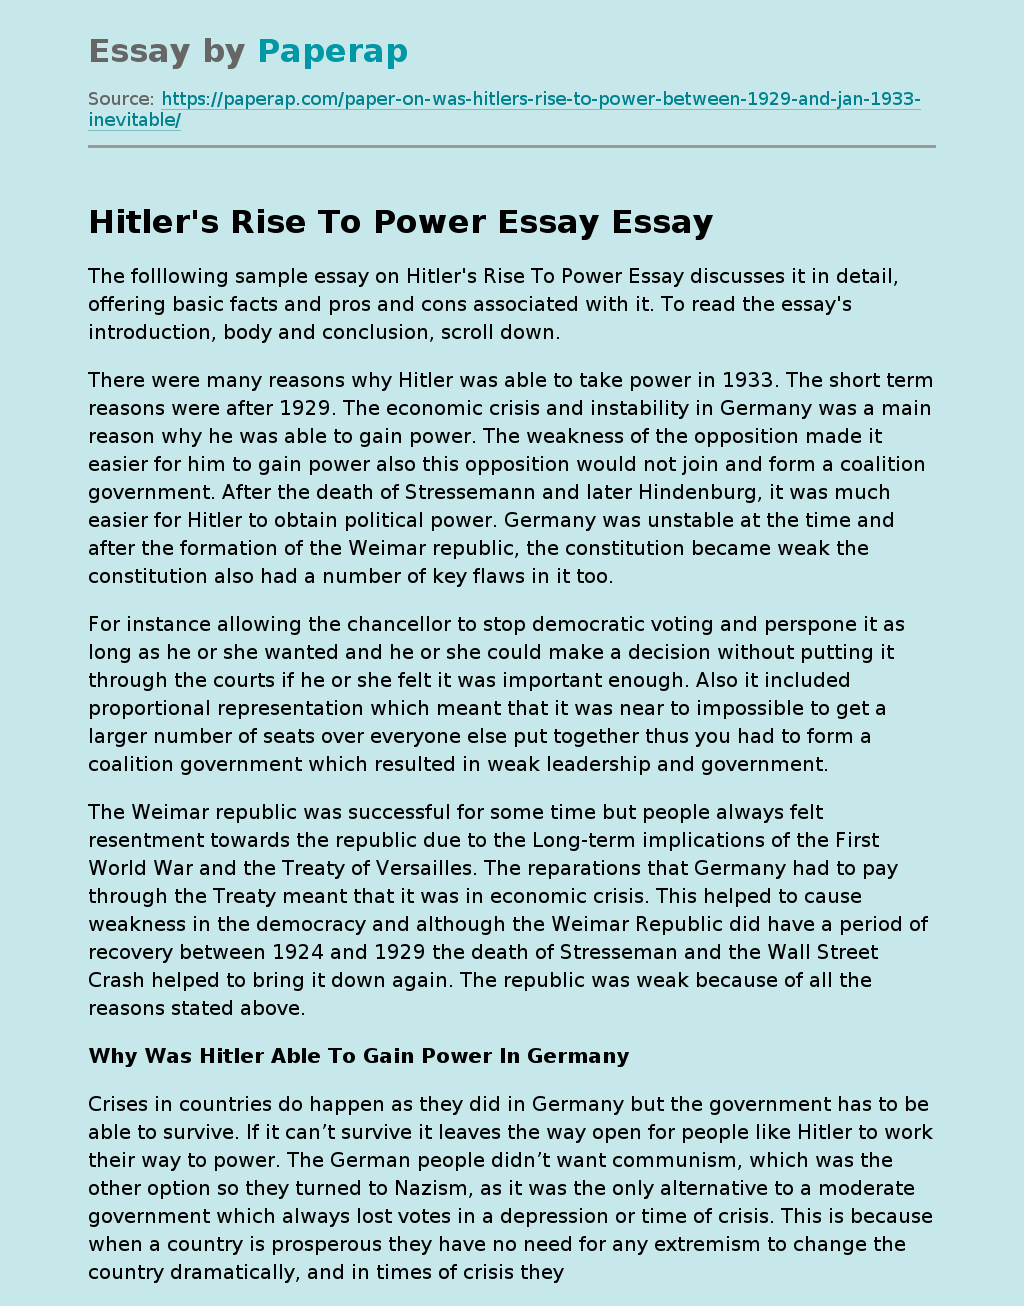 hitler's rise to power essay pdf